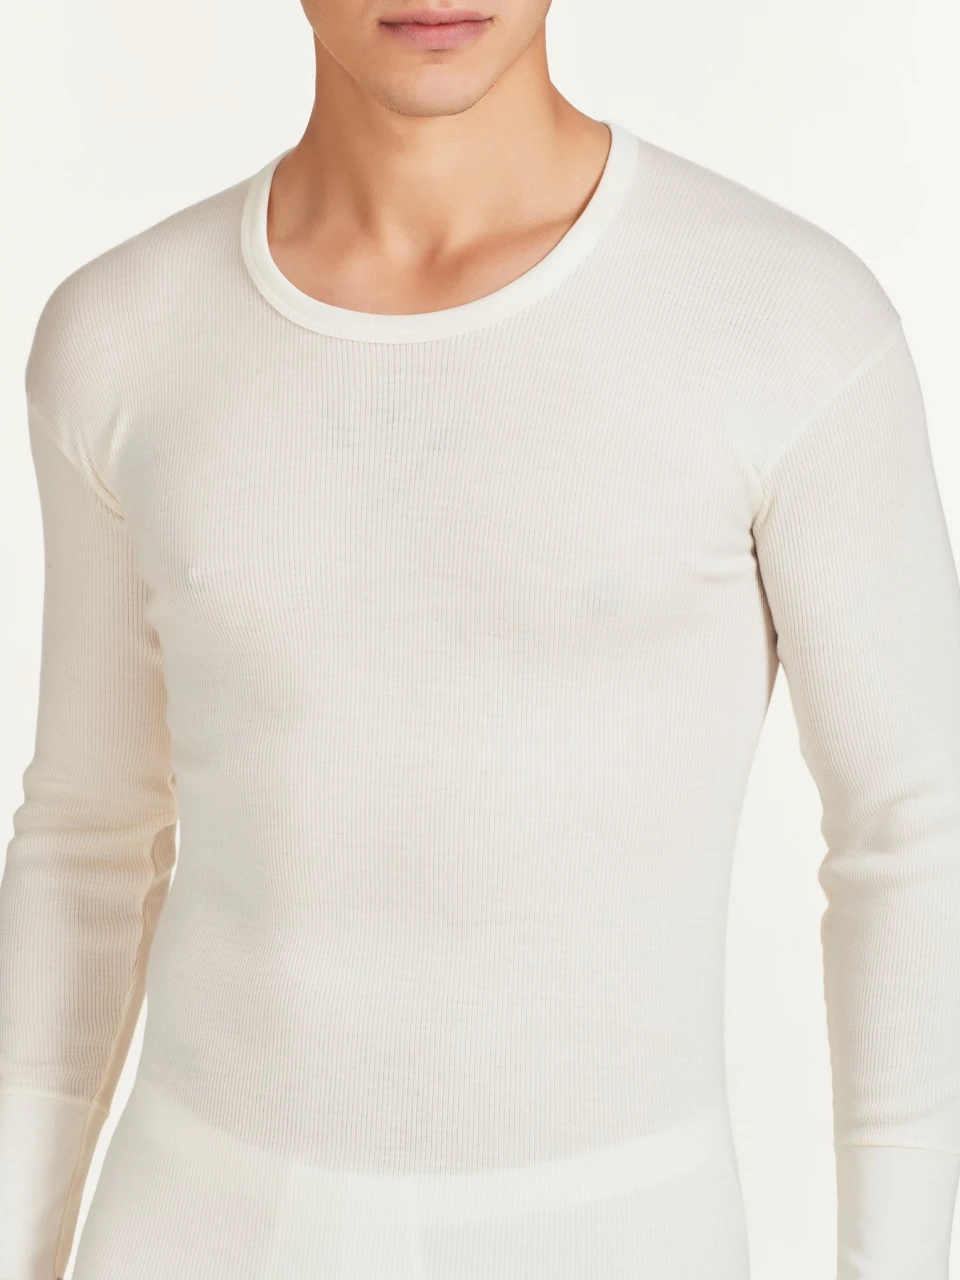 WSK man V neck undershirt in pure merino wool and silk